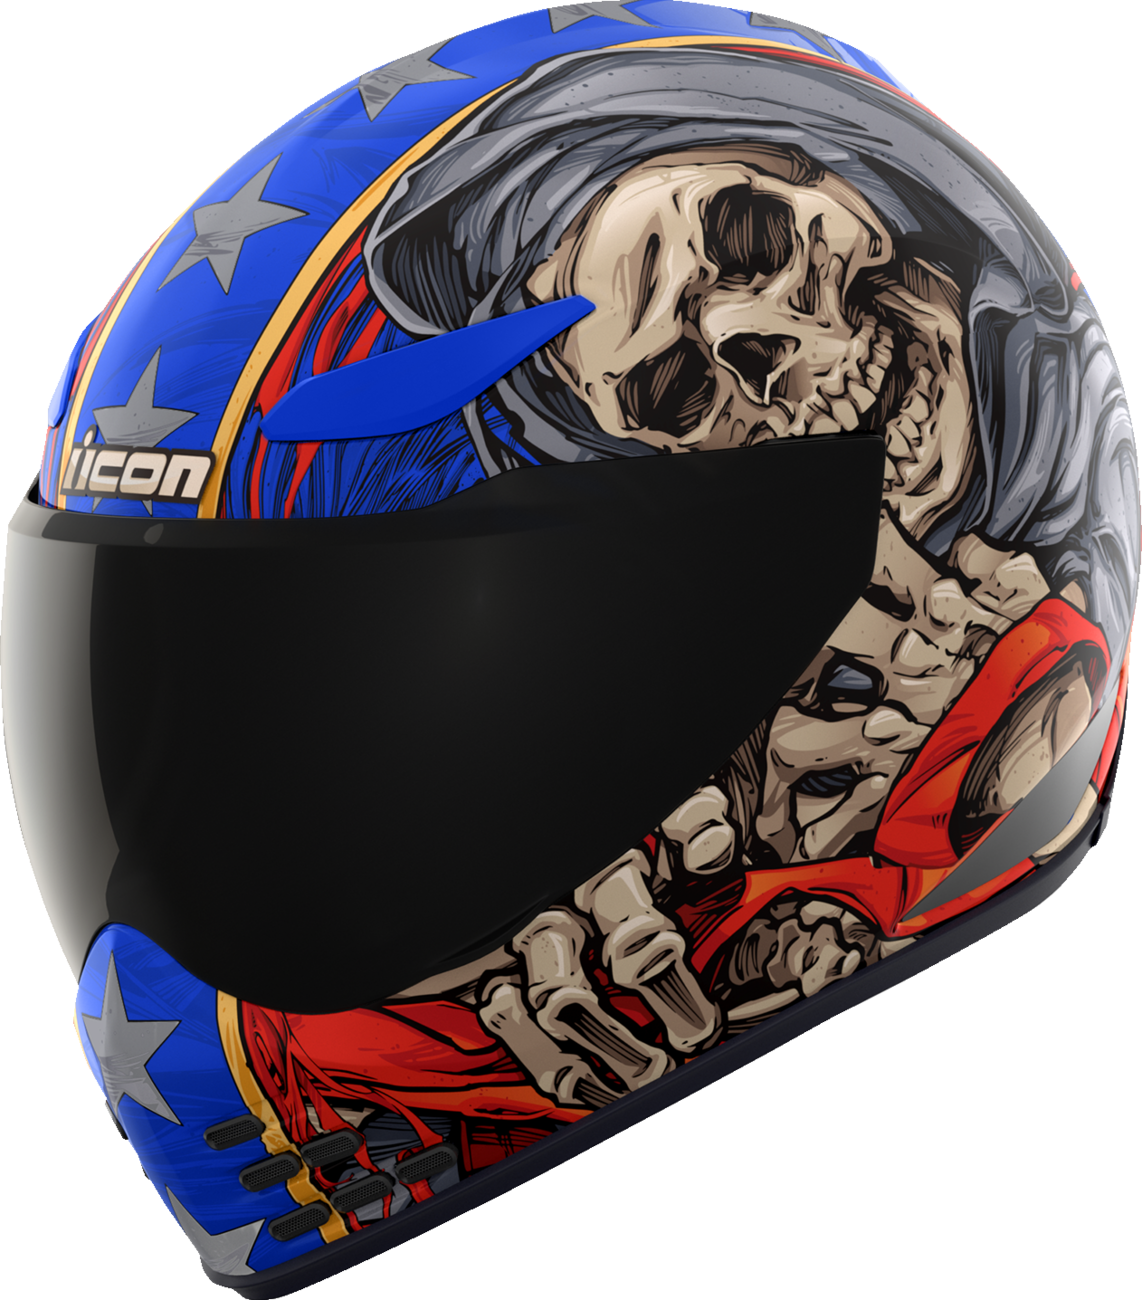 Icon Domain Revere Glory Unisex Adult Motorcycle Street Race Full Face Helmet